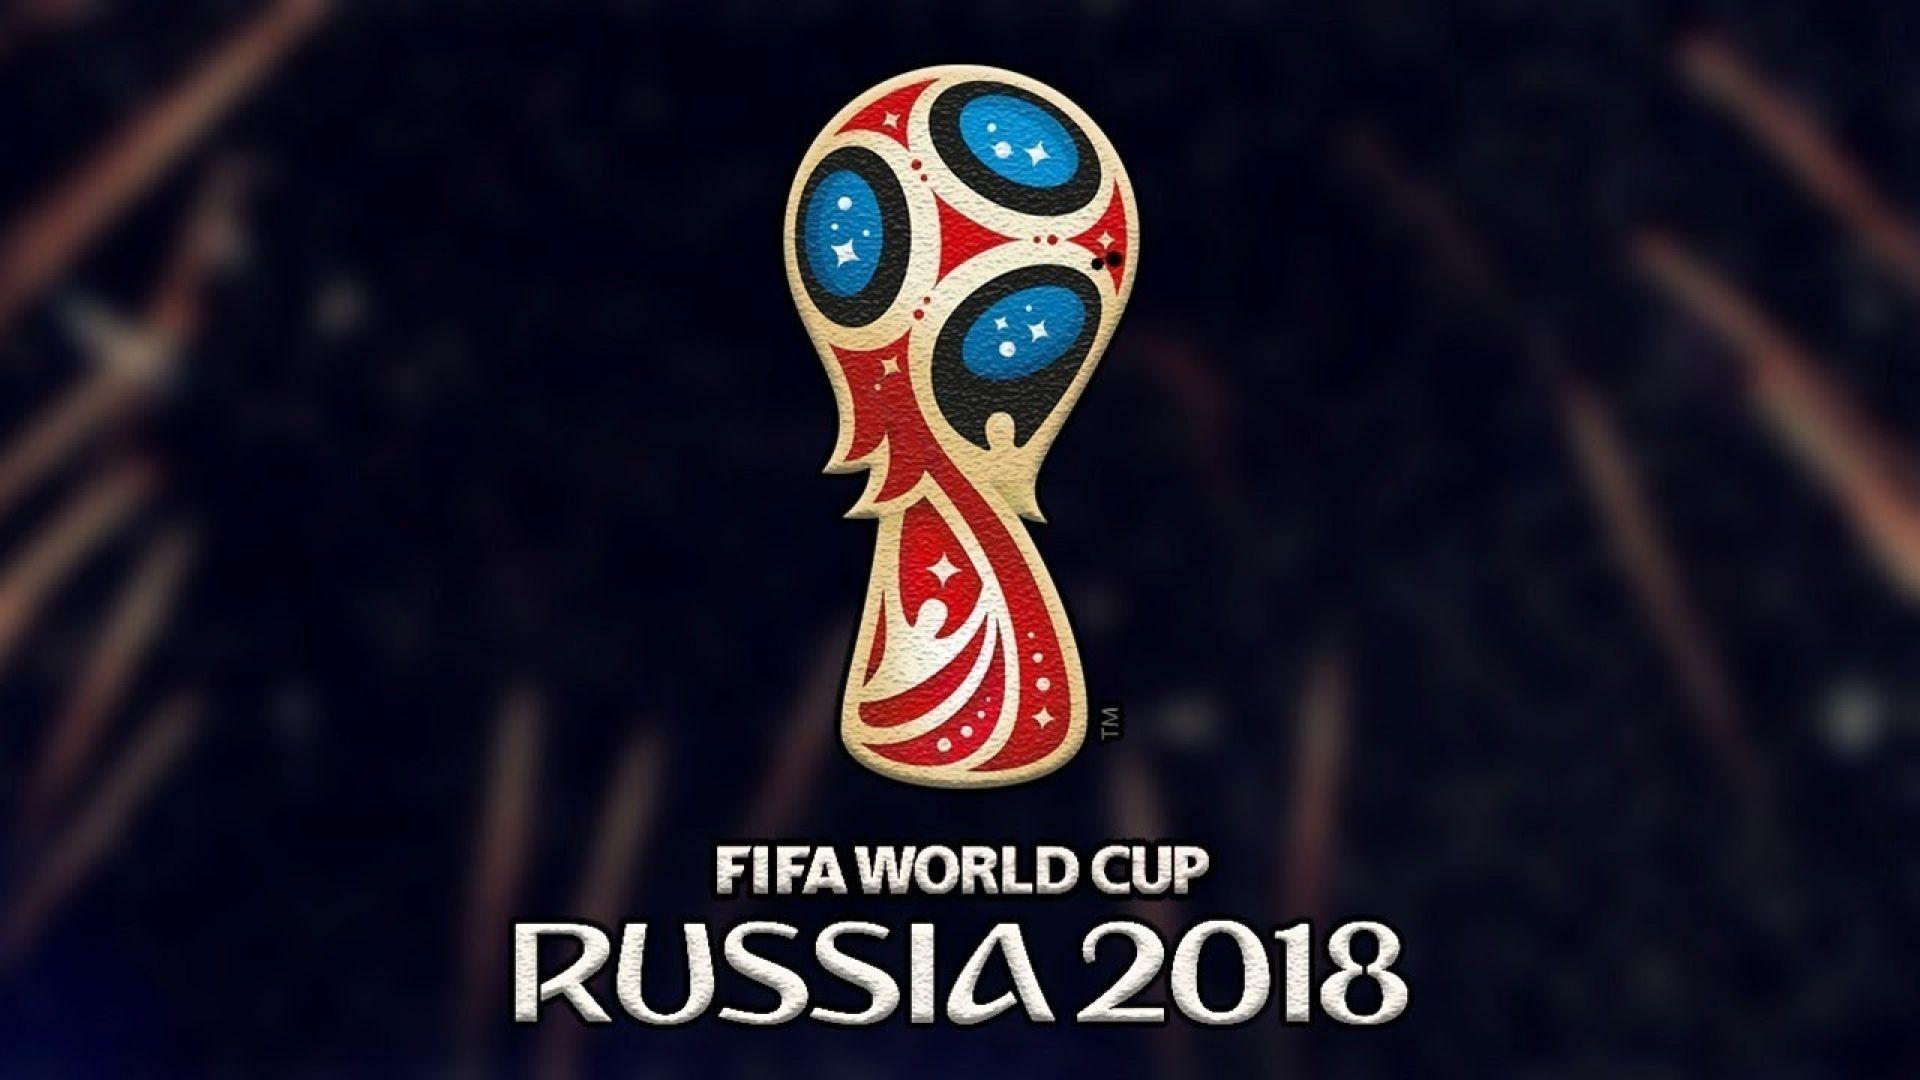 FIFA World Cup 2018 Wallpaper for Desktop or Laptop